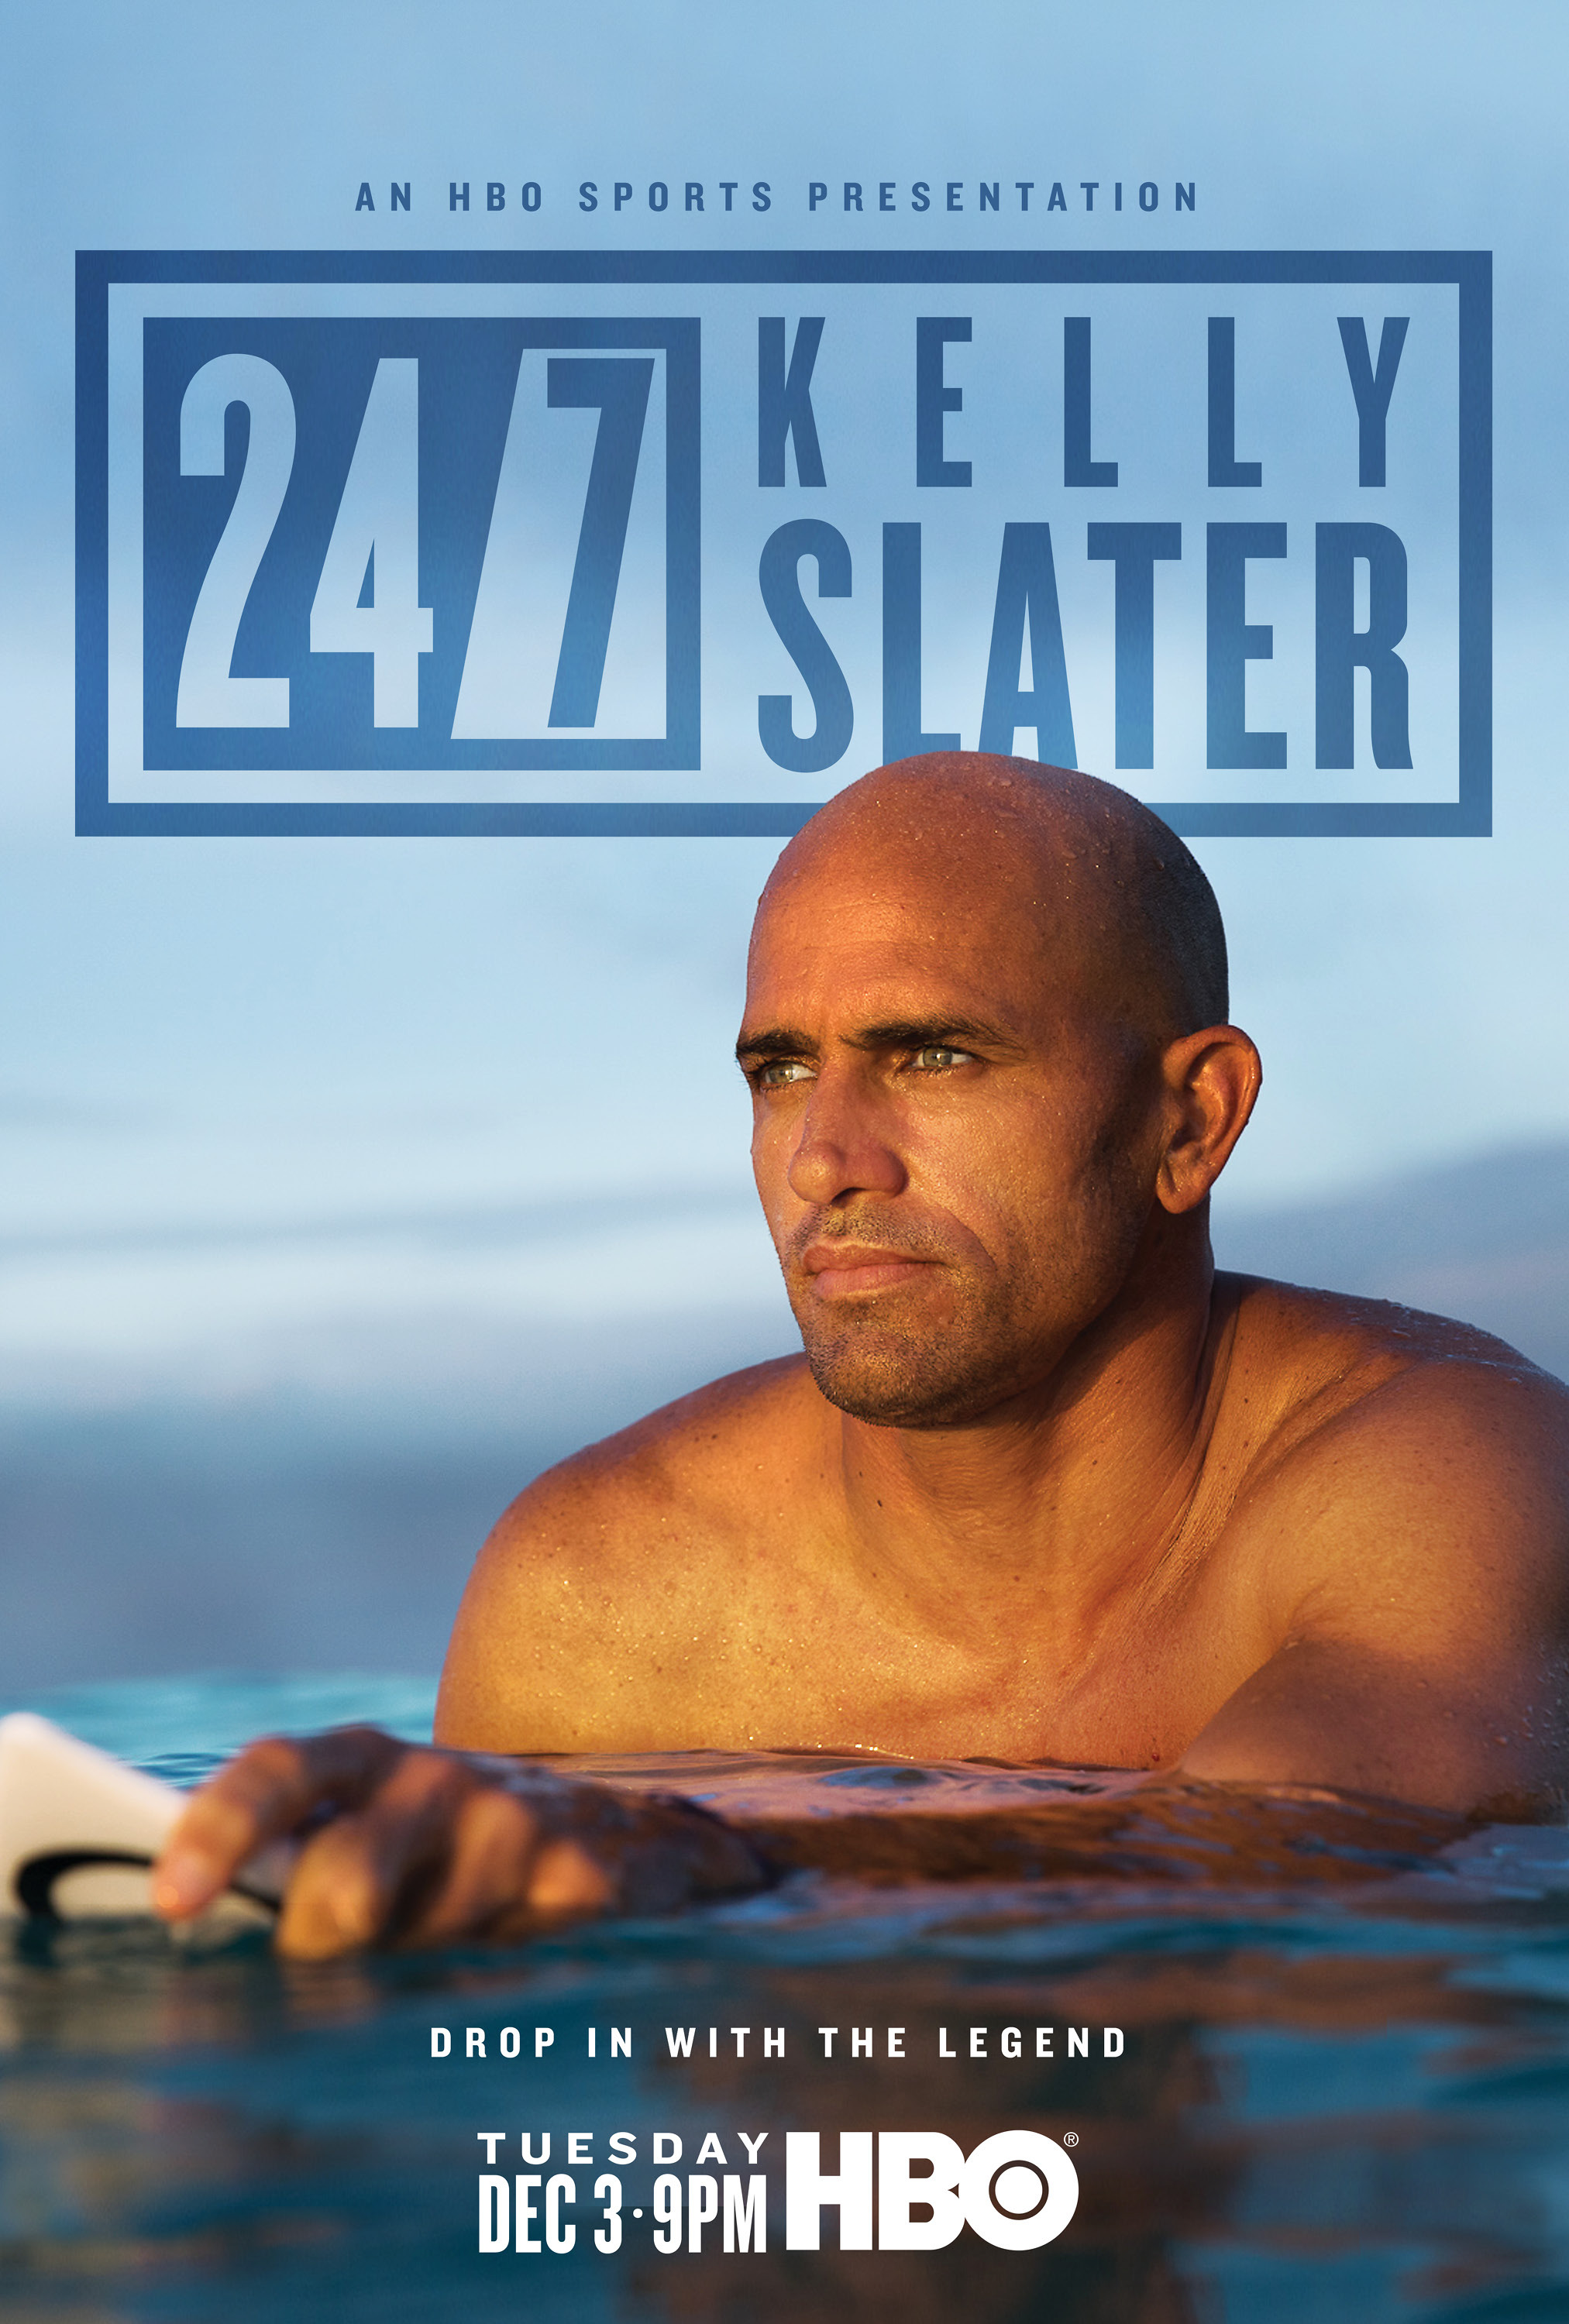 Mega Sized TV Poster Image for 24/7: Kelly Slater 